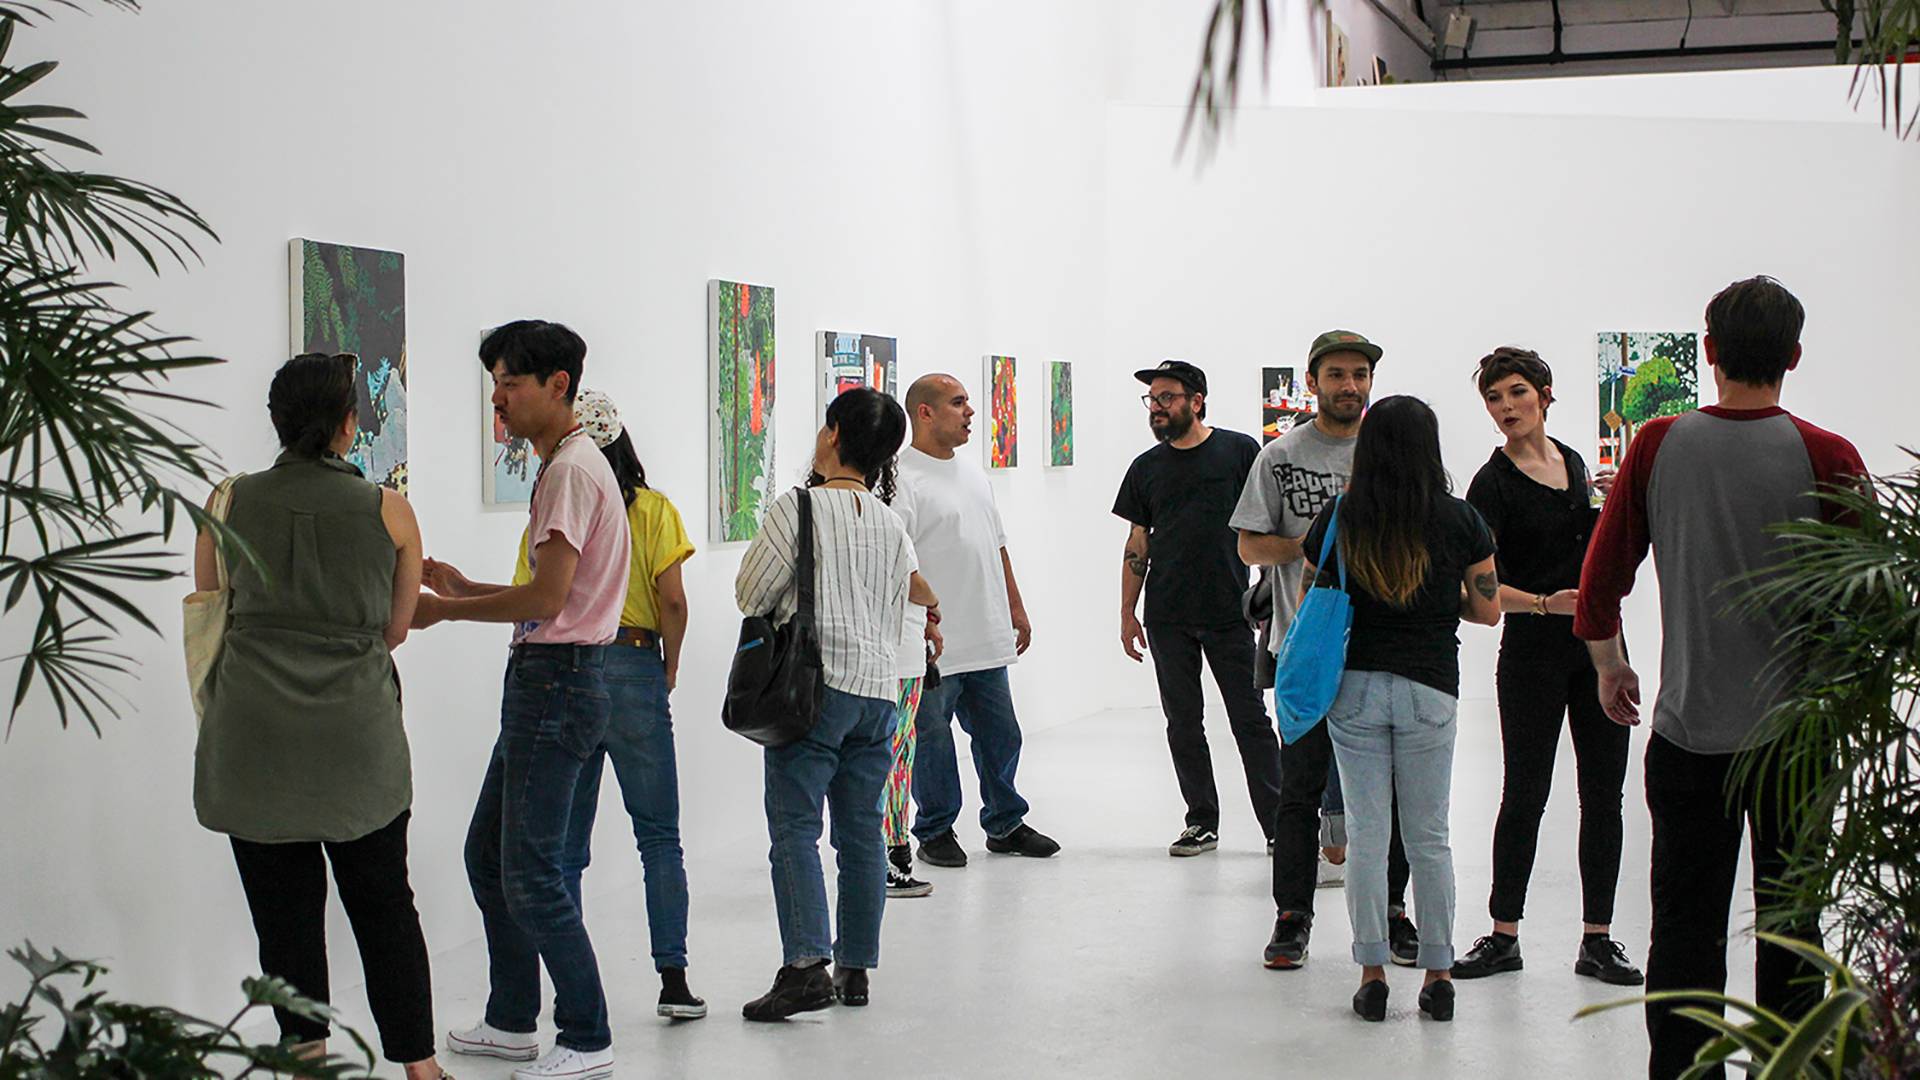 The new Guerrero Gallery during the opening of Hilary Pecis' 'El Verano' in 2016. Alan Gonzalez; Courtesy of Guerrero Gallery